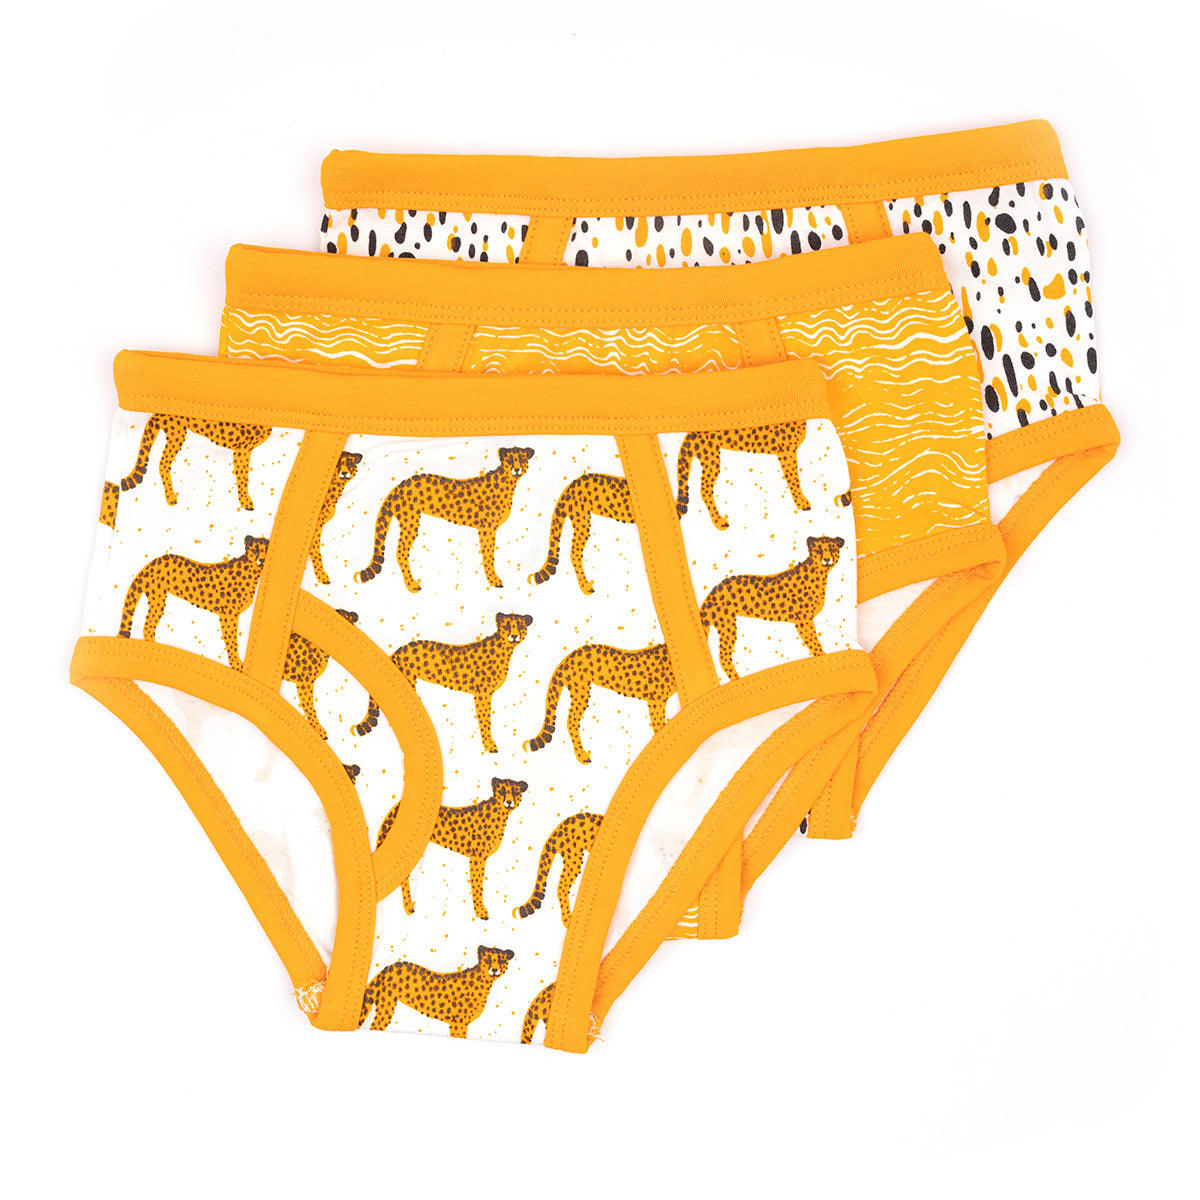  JELEUON 4 Pack Of Little Boys Truck Tiger Animal Print Cotton  Boxer Briefs Panties Underwear Panties Orange: Clothing, Shoes & Jewelry